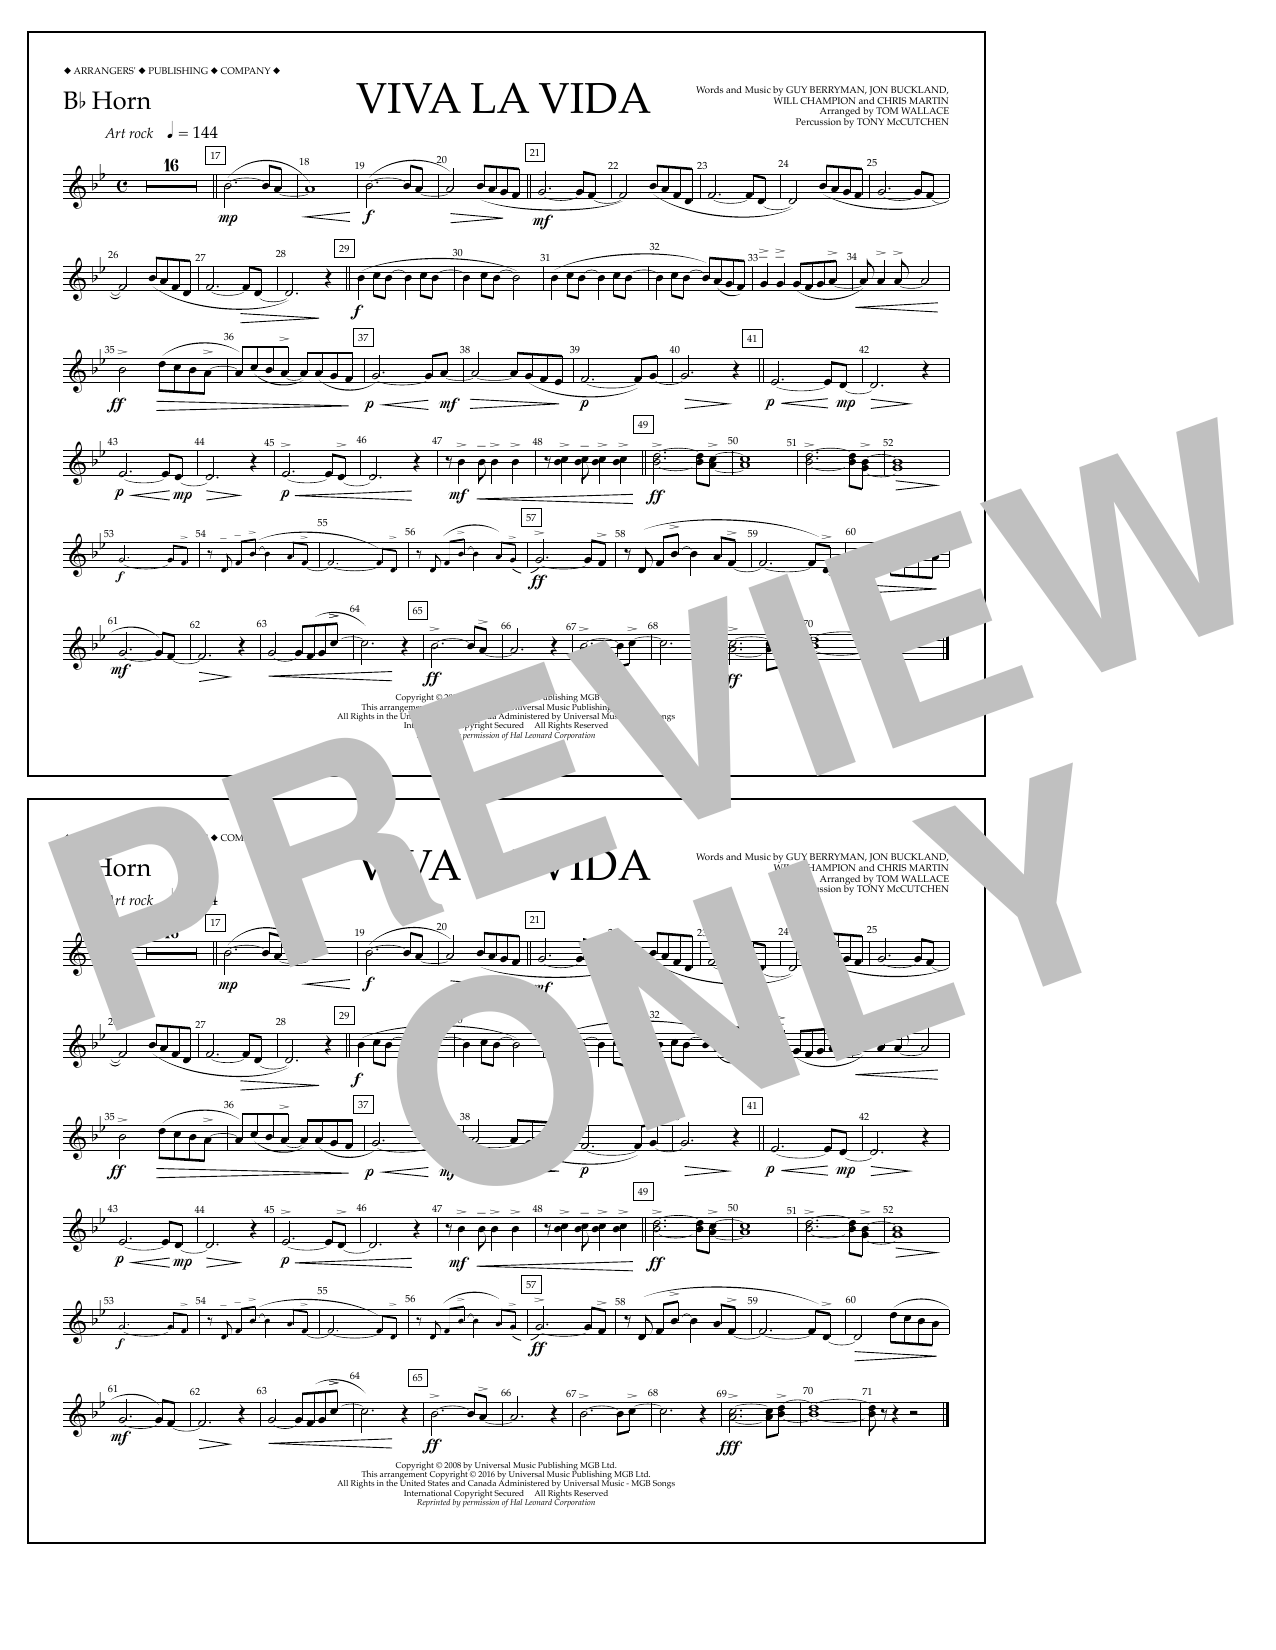 Tom Wallace Viva La Vida - Bb Horn Sheet Music Notes & Chords for Marching Band - Download or Print PDF